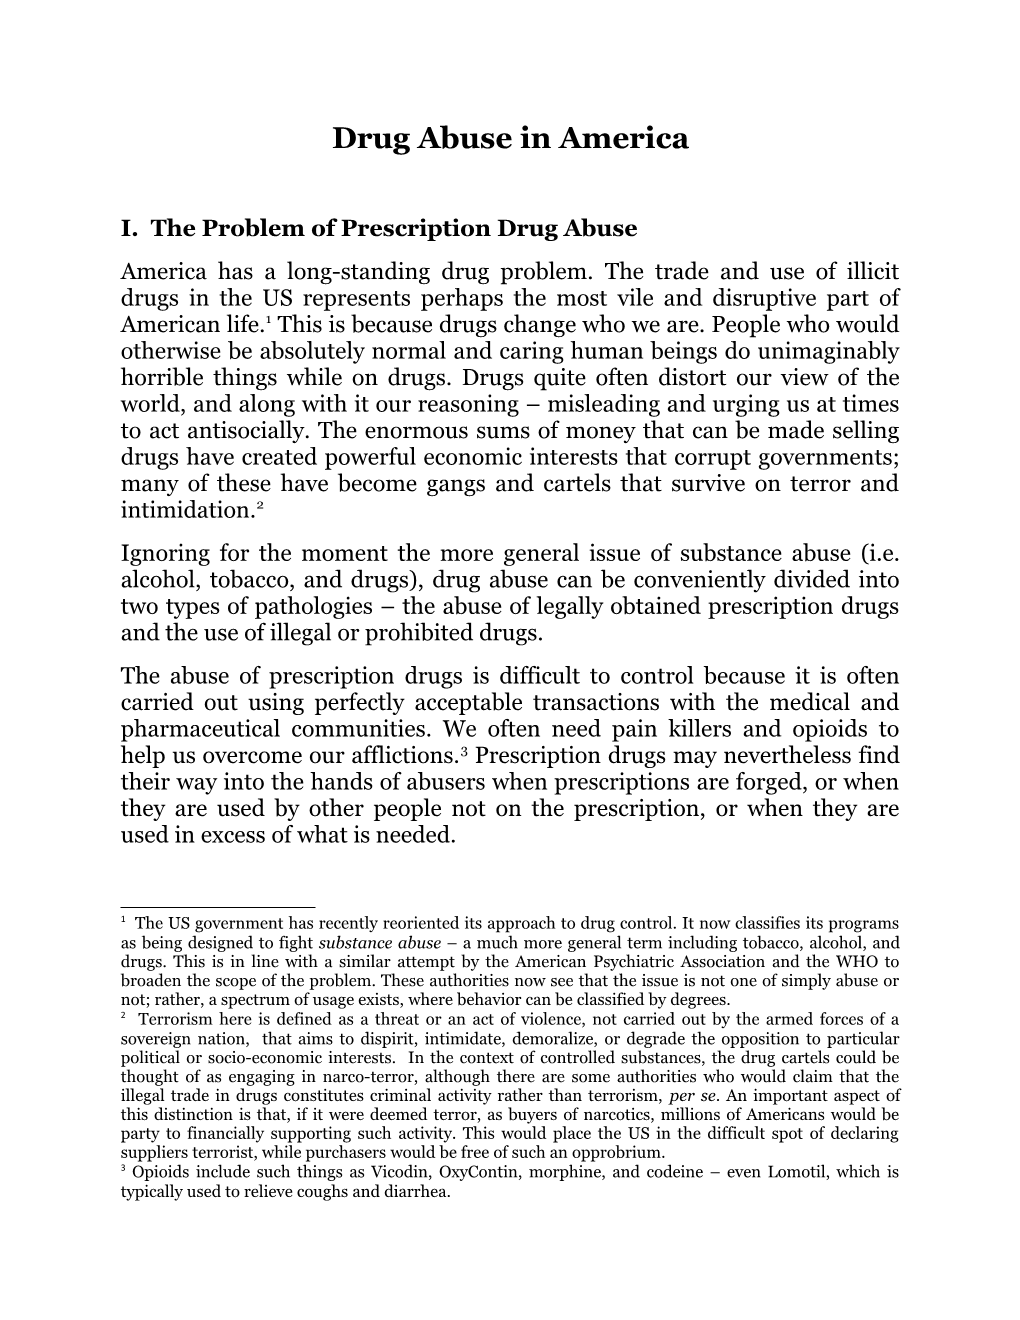 I. the Problem of Prescription Drug Abuse